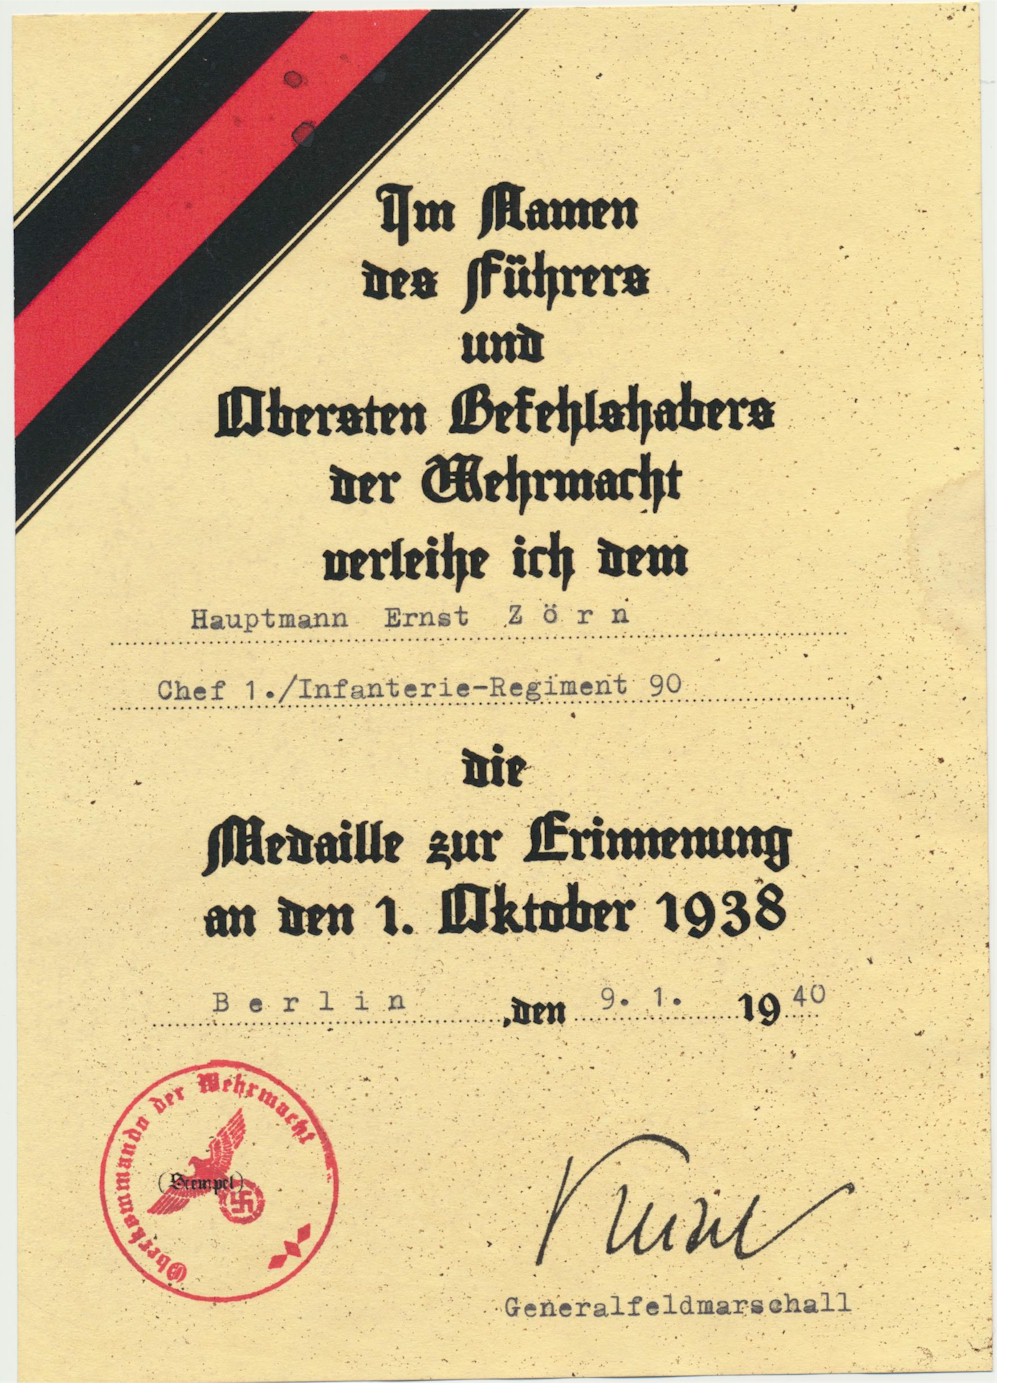 GERMAN 1ST OCTOBER 1938 MEDAL HAUPTMANN ERNST ZORN CHEF 1./ INFANTERIE REGIMENT 90 DOCUMENT